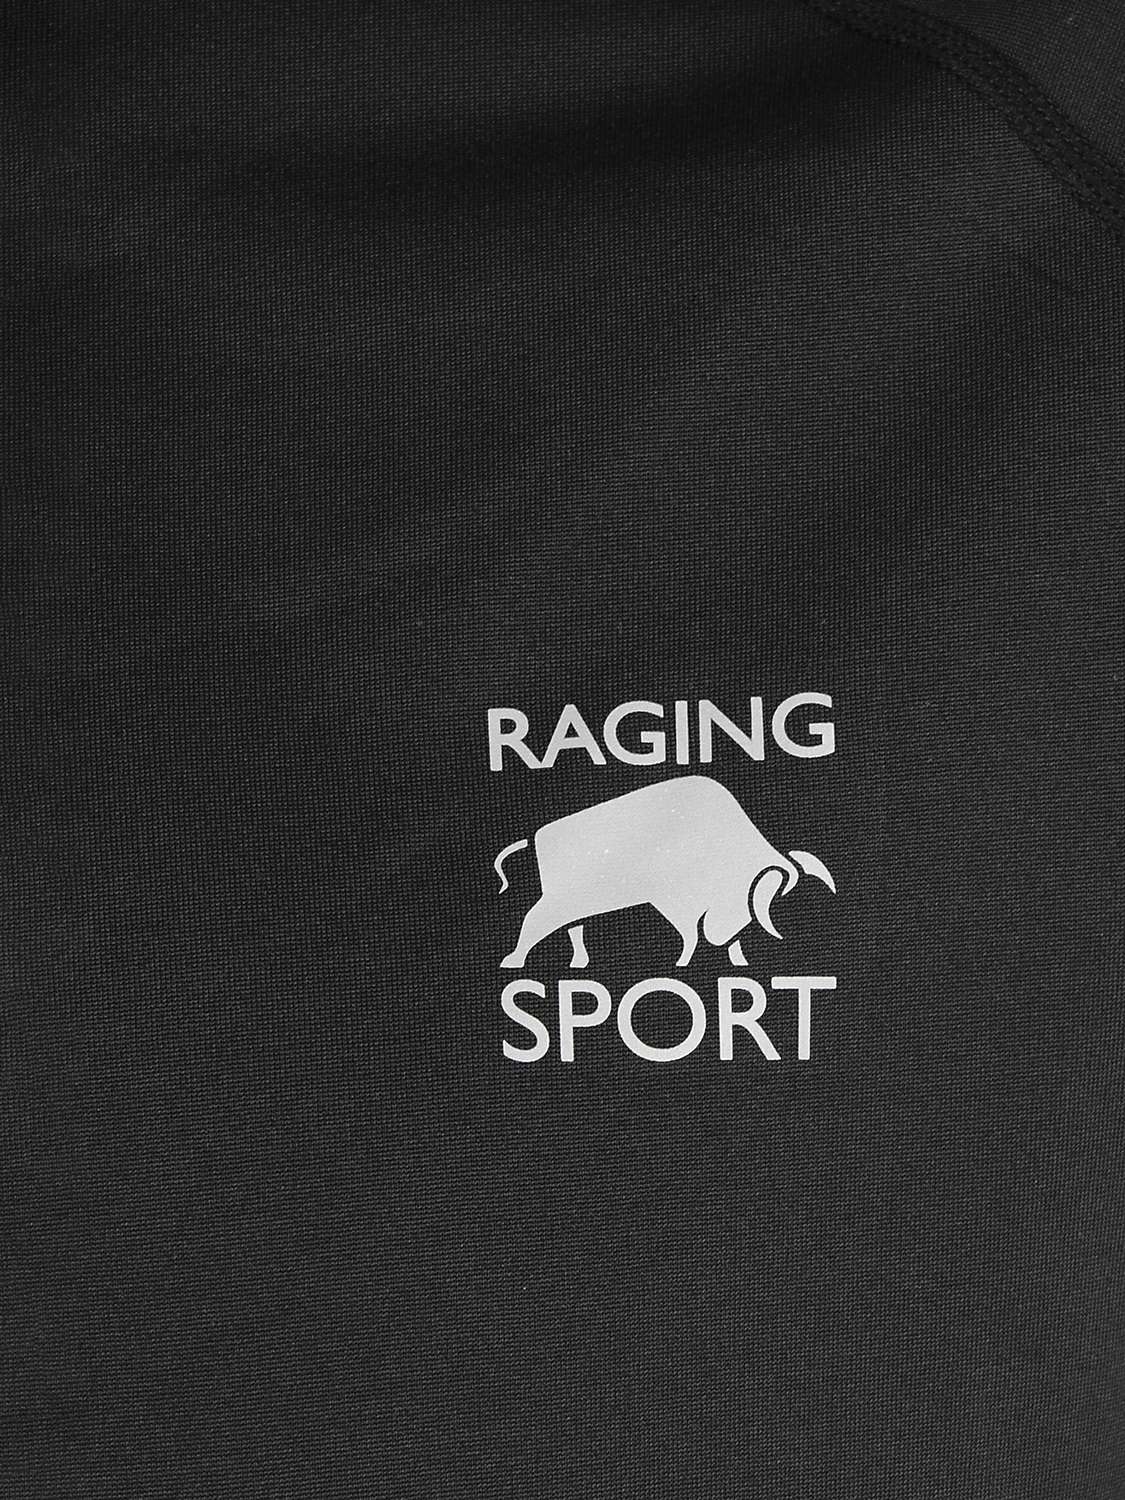 Buy Raging Bull Performance 1/4 Zip Long Sleeve Gym Top Online at johnlewis.com